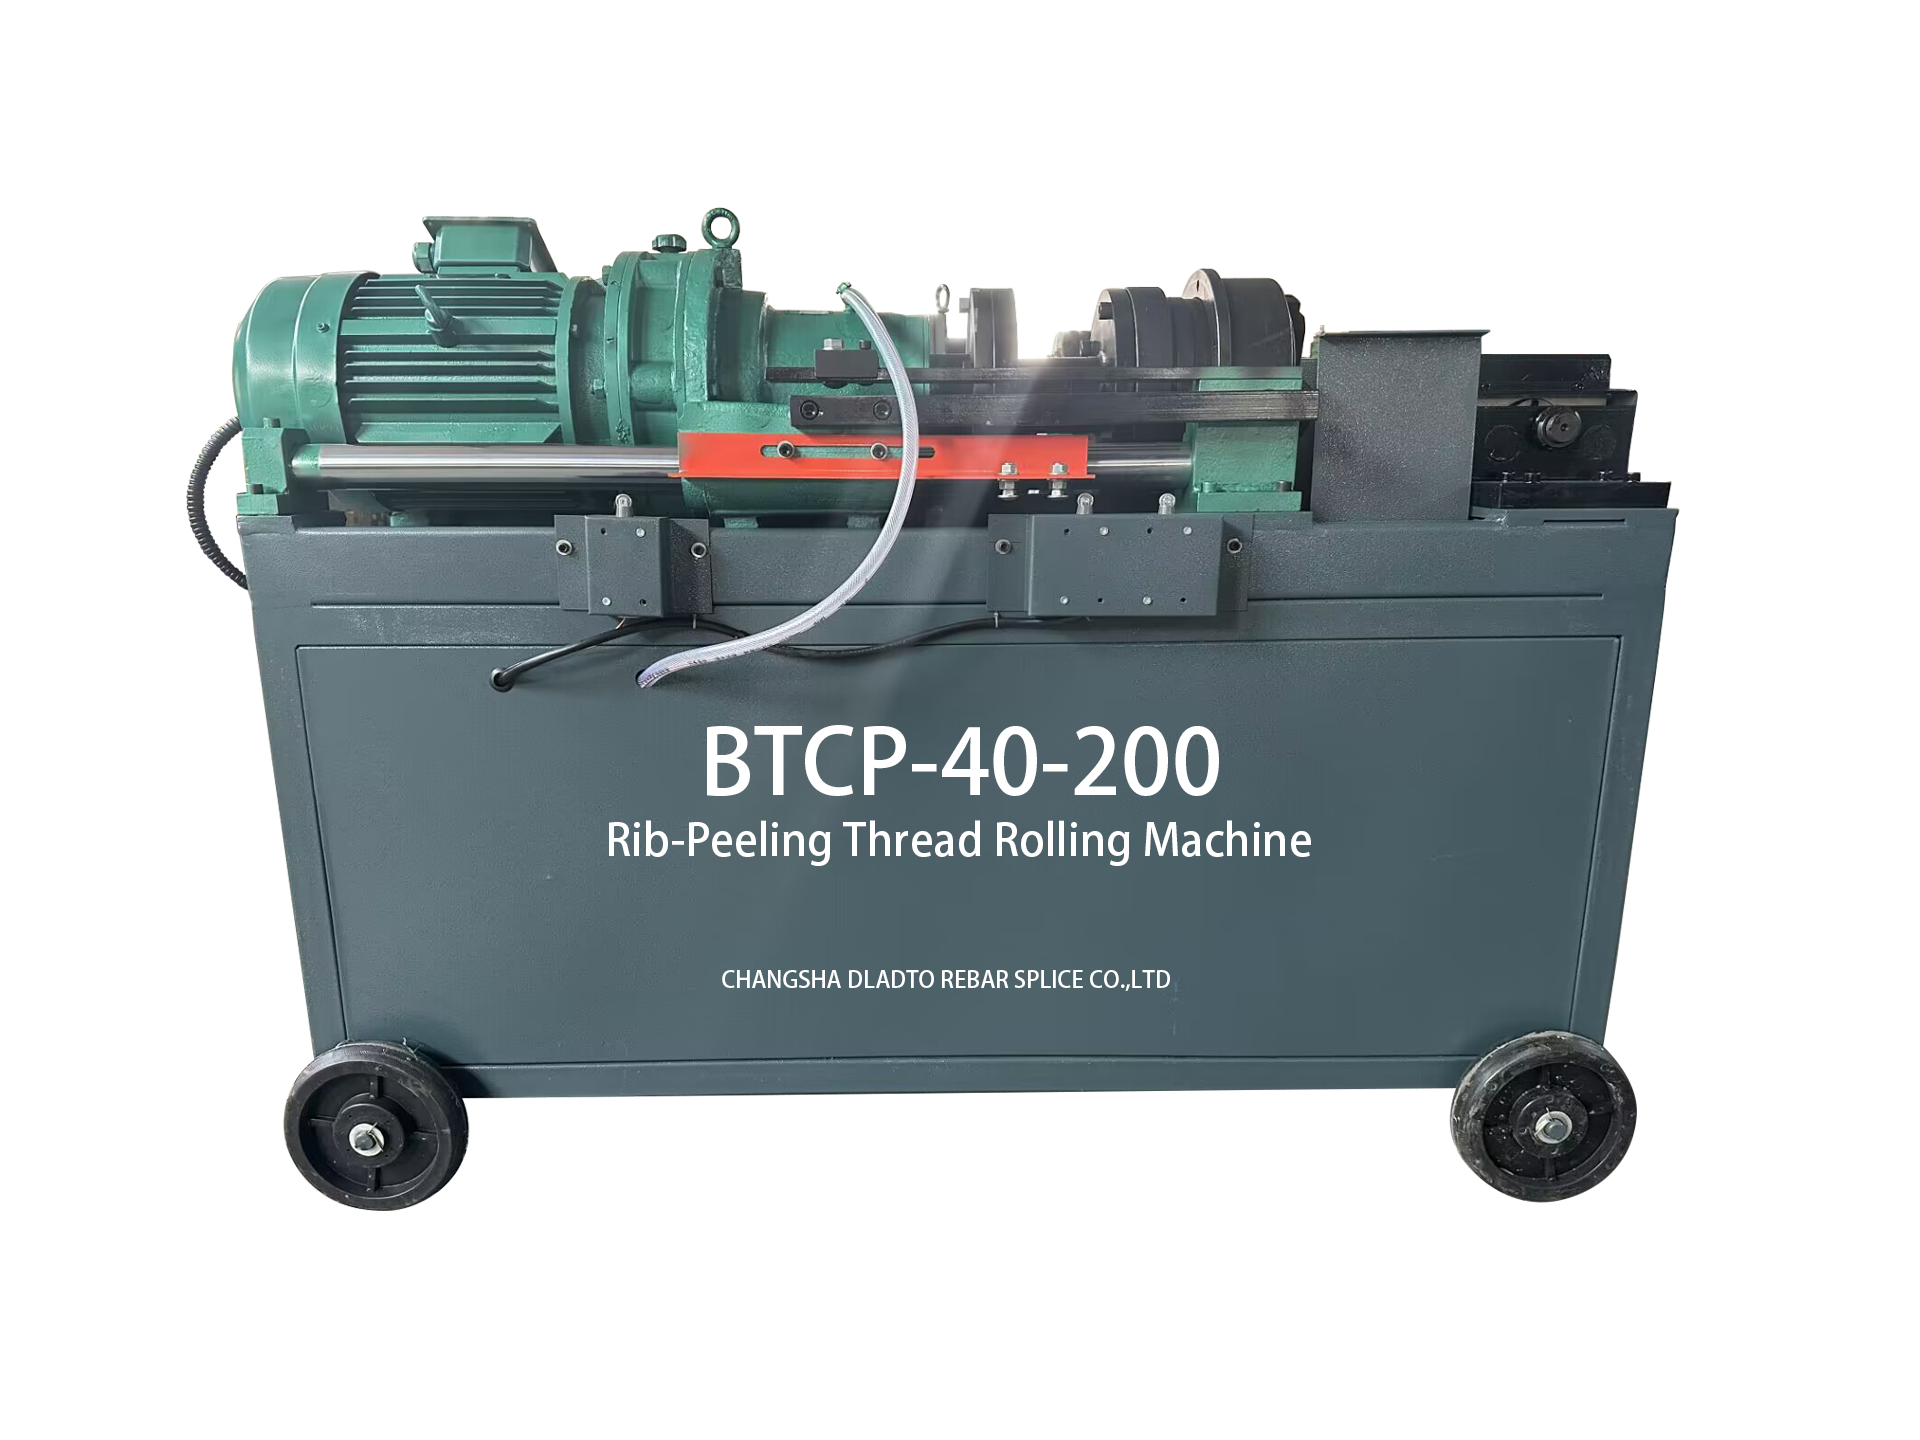 Rebar Rib -peeling And Threading Roller Machine BTCP-40-200